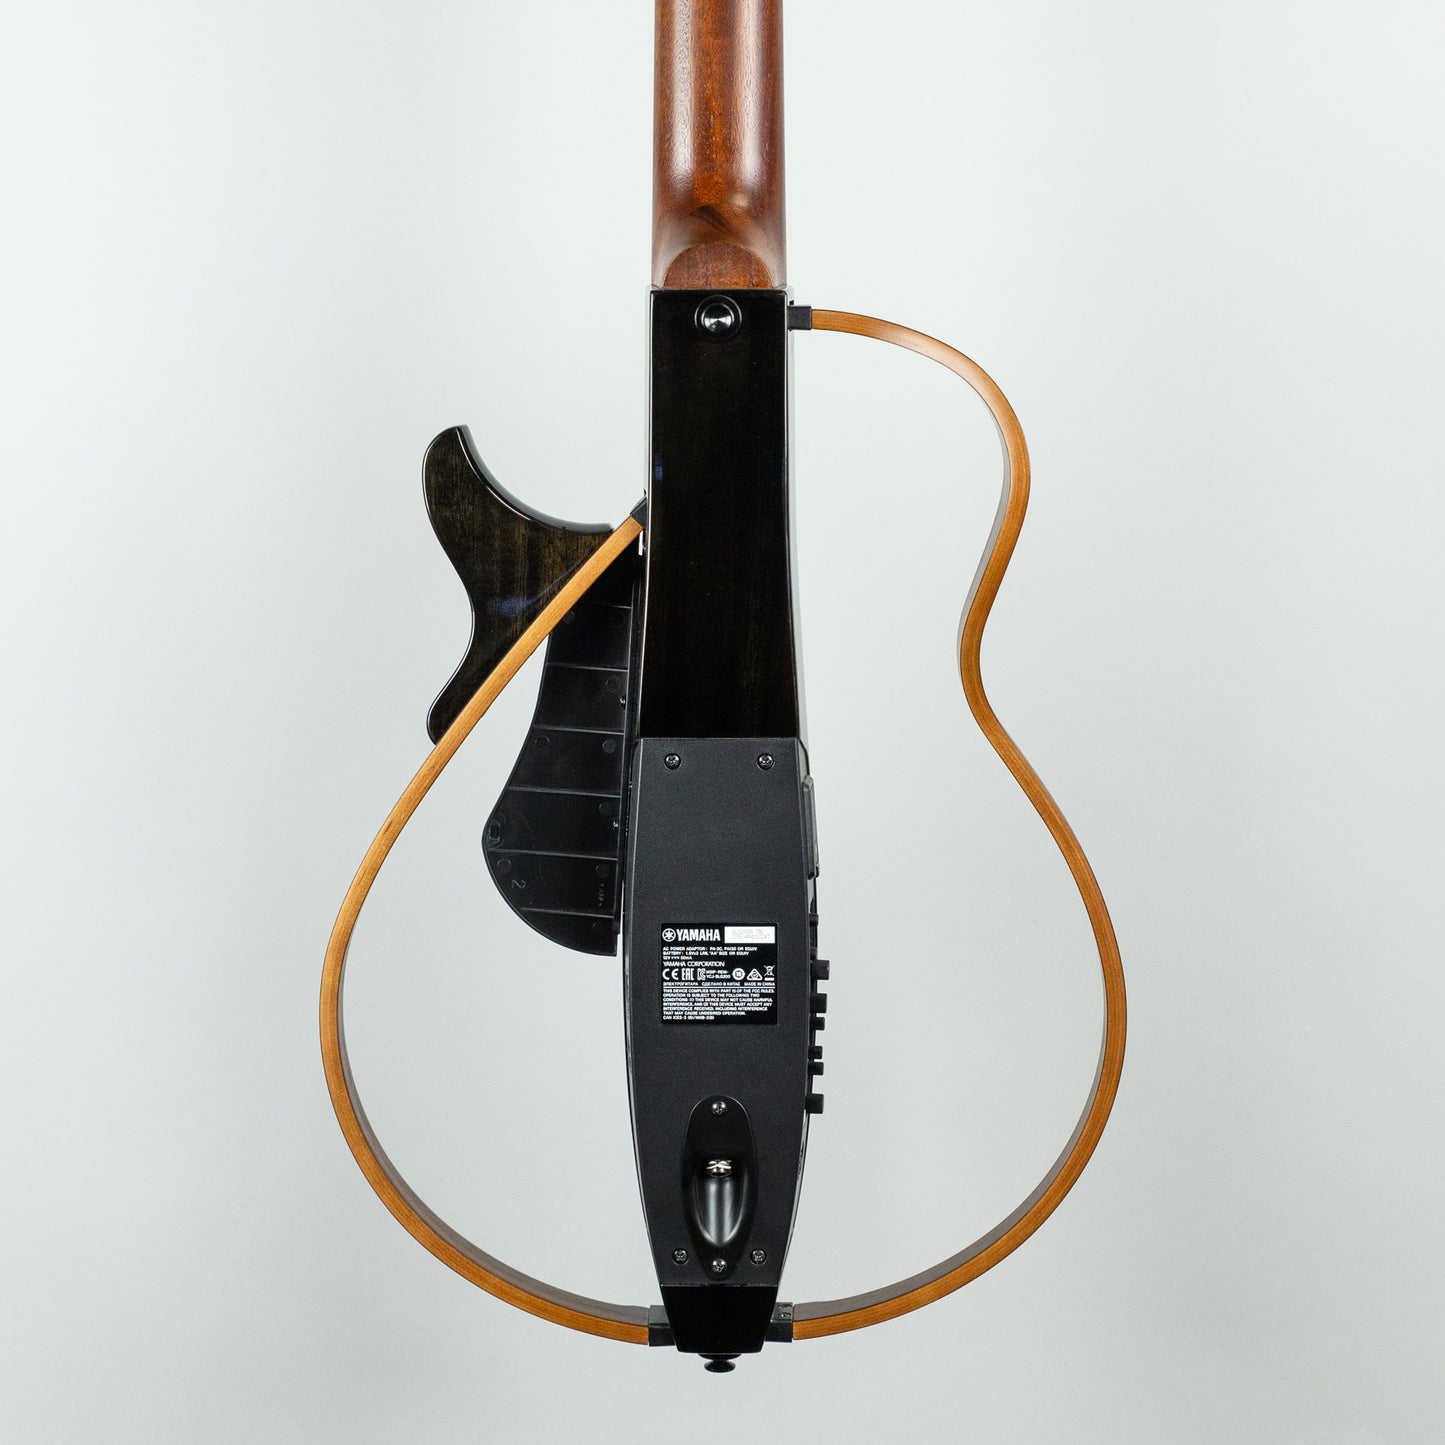 Yamaha SLG200N-TBL Nylon String Silent Guitar in Translucent Black